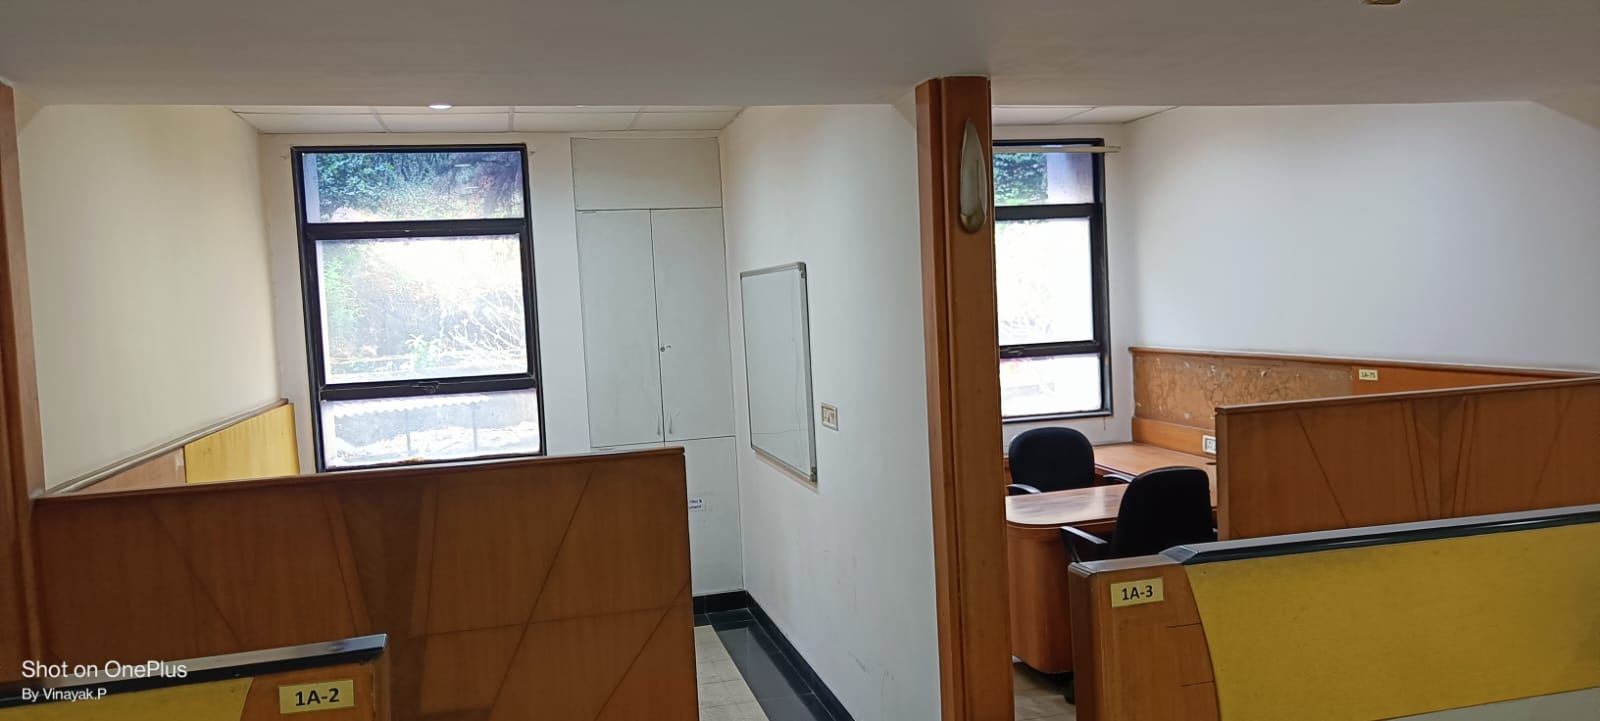 Rent Office/ Shop, 6000 sq ft carpet area, Furnished for rent